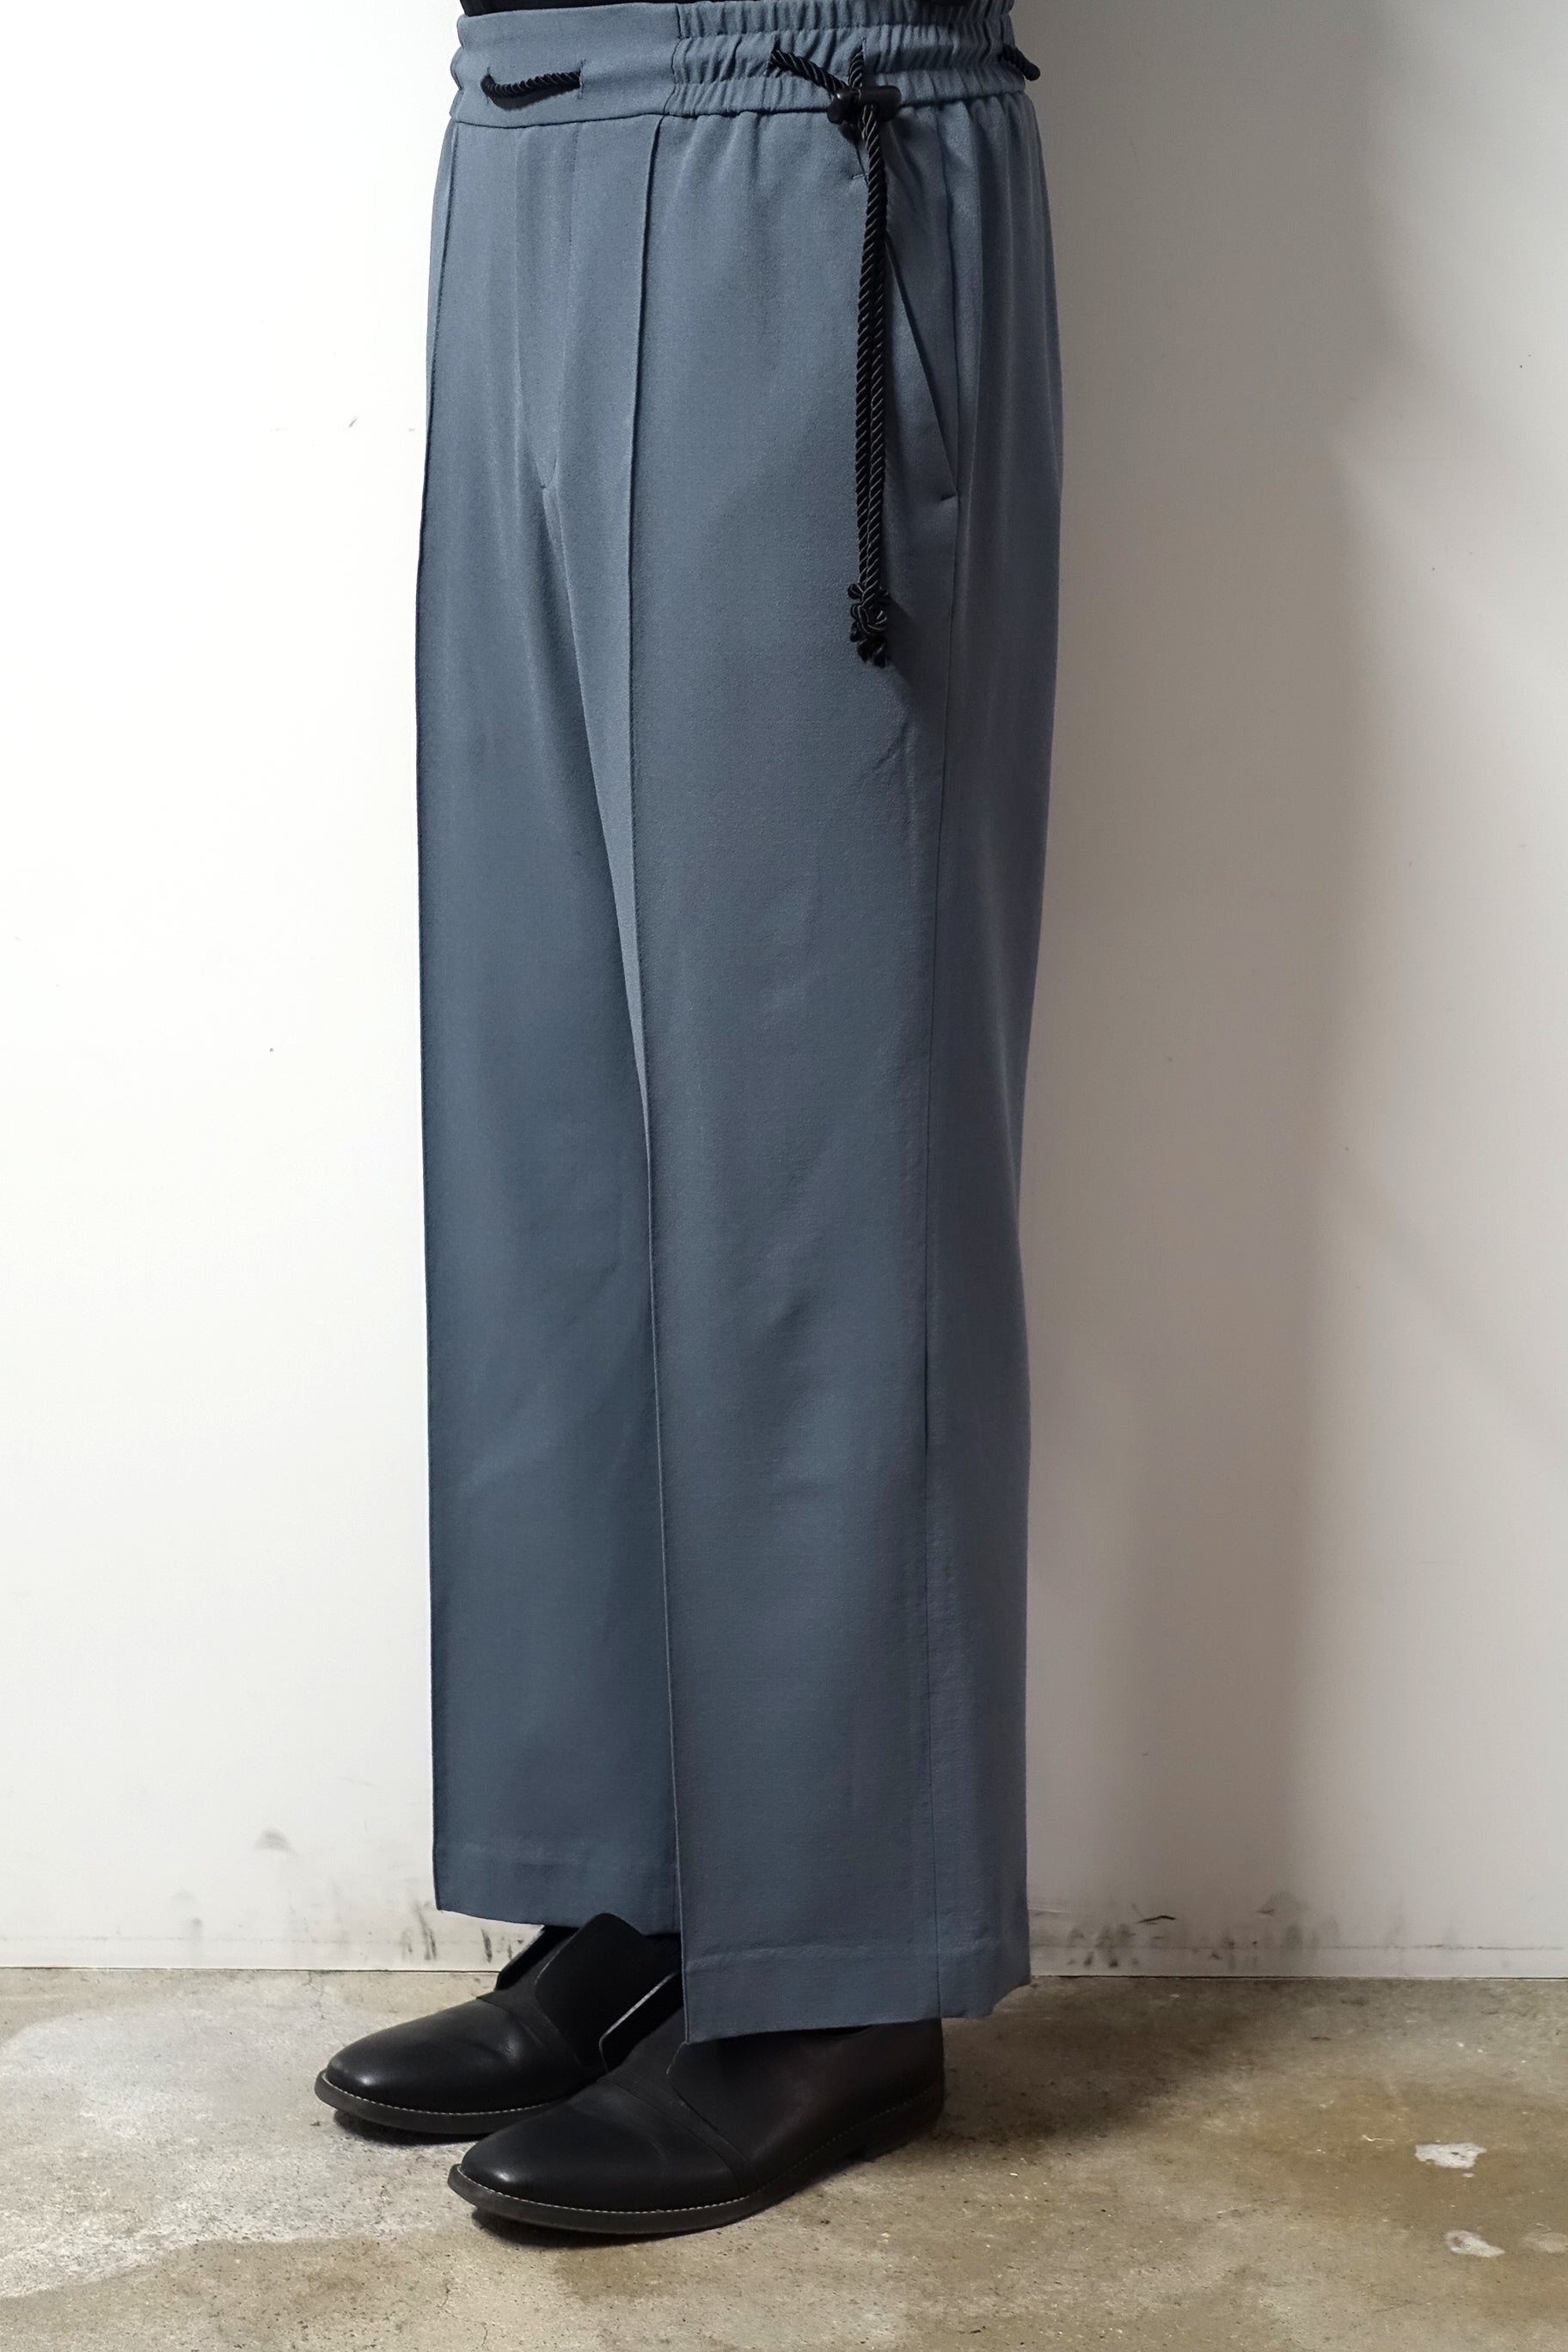 ETHOSENS(エトセンス)/Georgette pin tuck pants/Blue gray 通販 